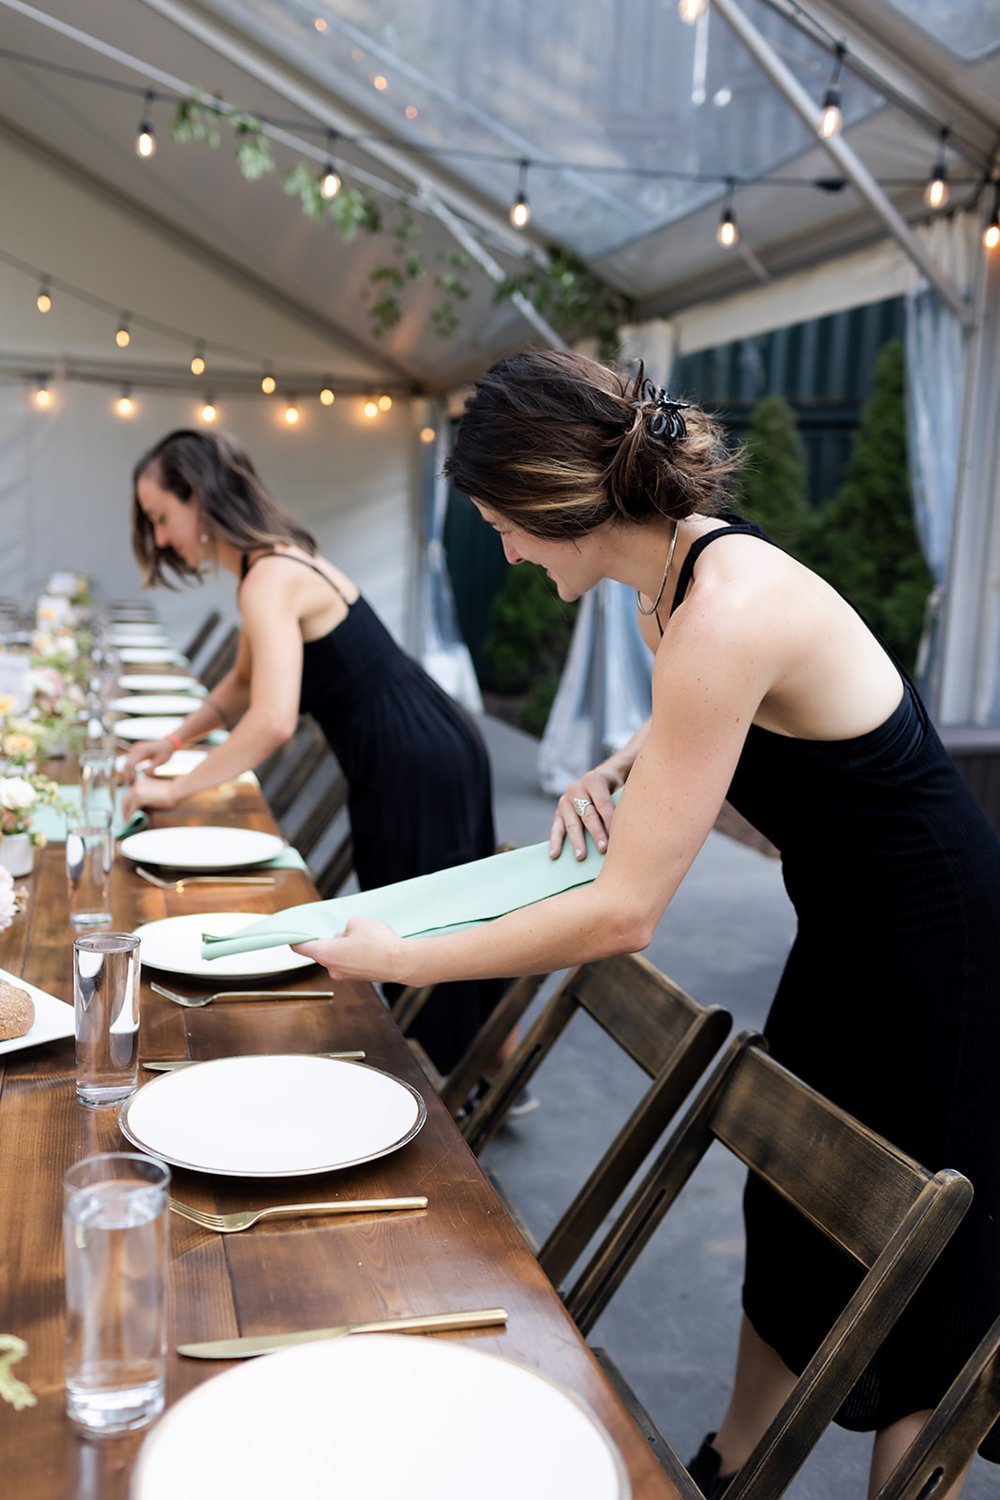 women of art de cuisine catering arranging table settings at outdoor wedding